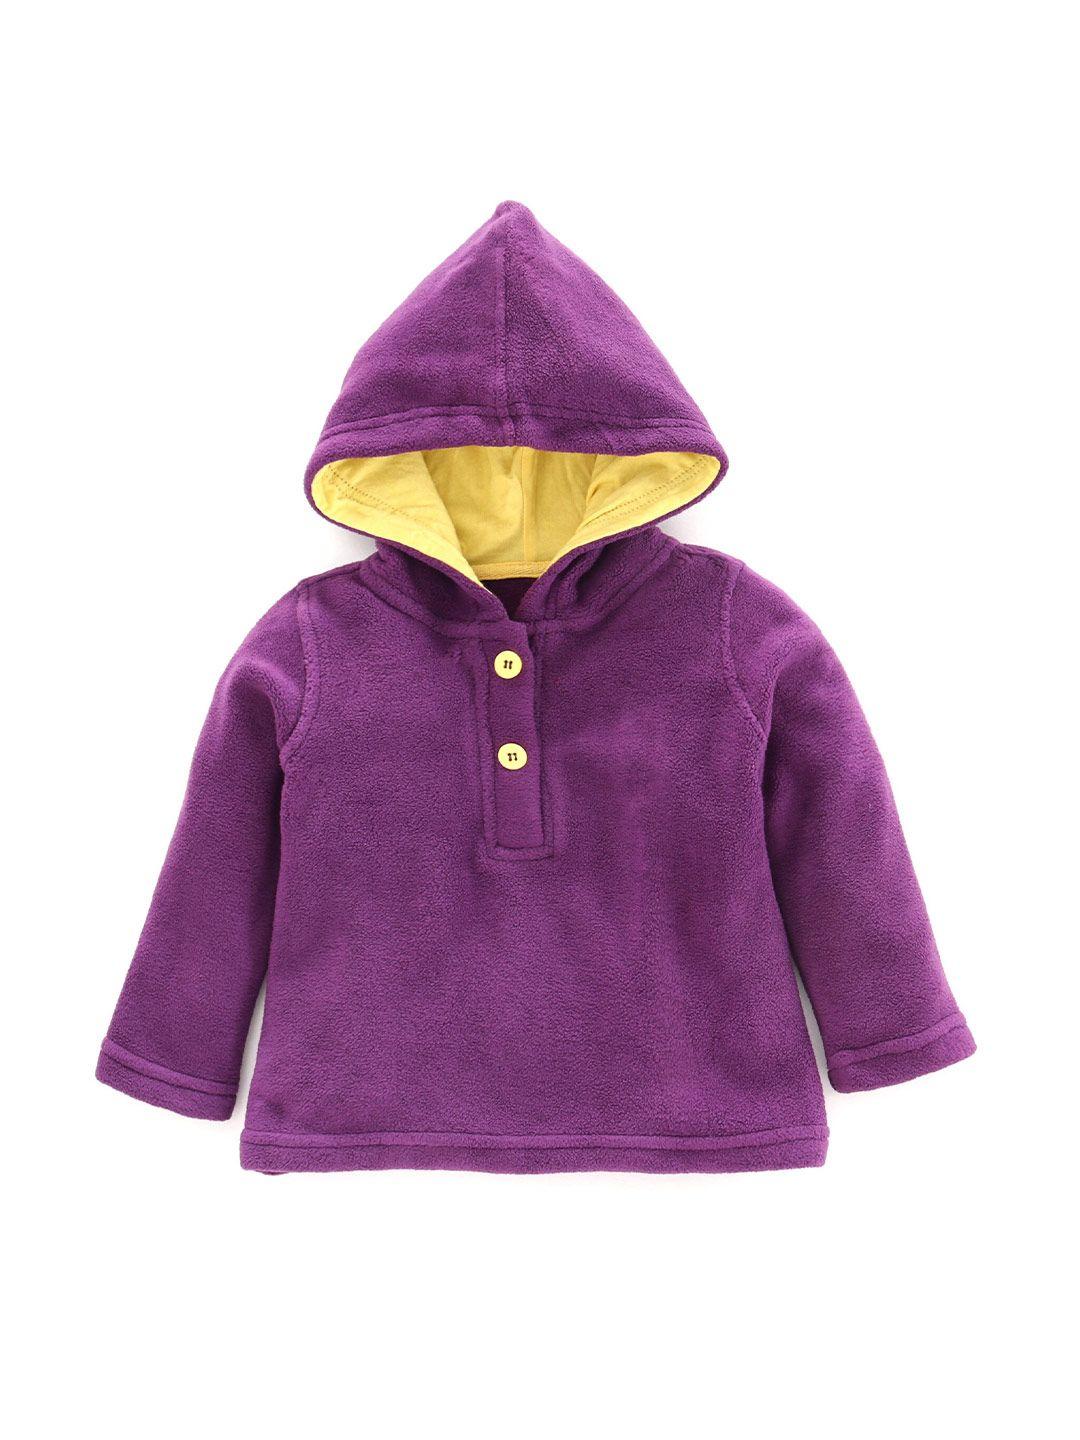 nino bambino unisex kids cotton hooded sweatshirt